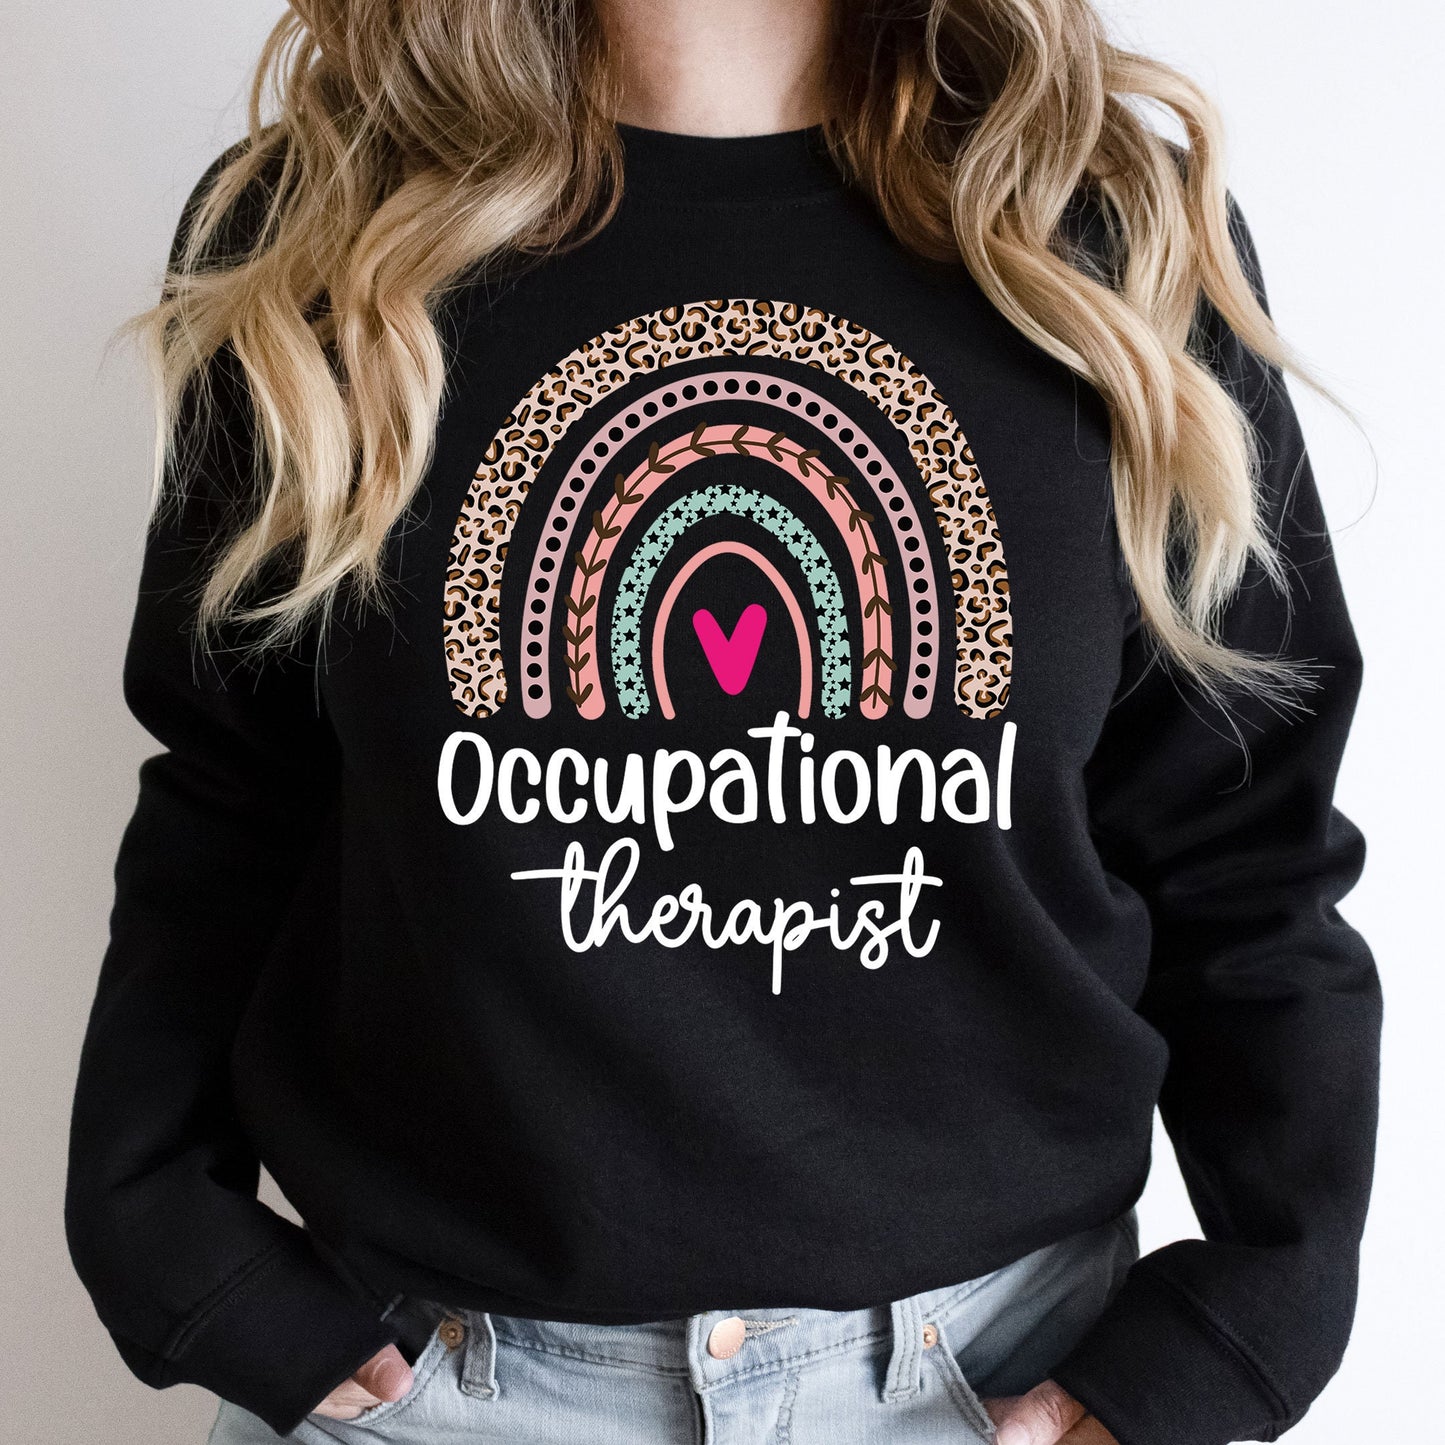 Occupational Therapist Sweatshirt, Ota Sweater, Occupational Therapist Crewneck, OT Grad Gift for Occupational Therapy, PEDS OT Gifts Shirt